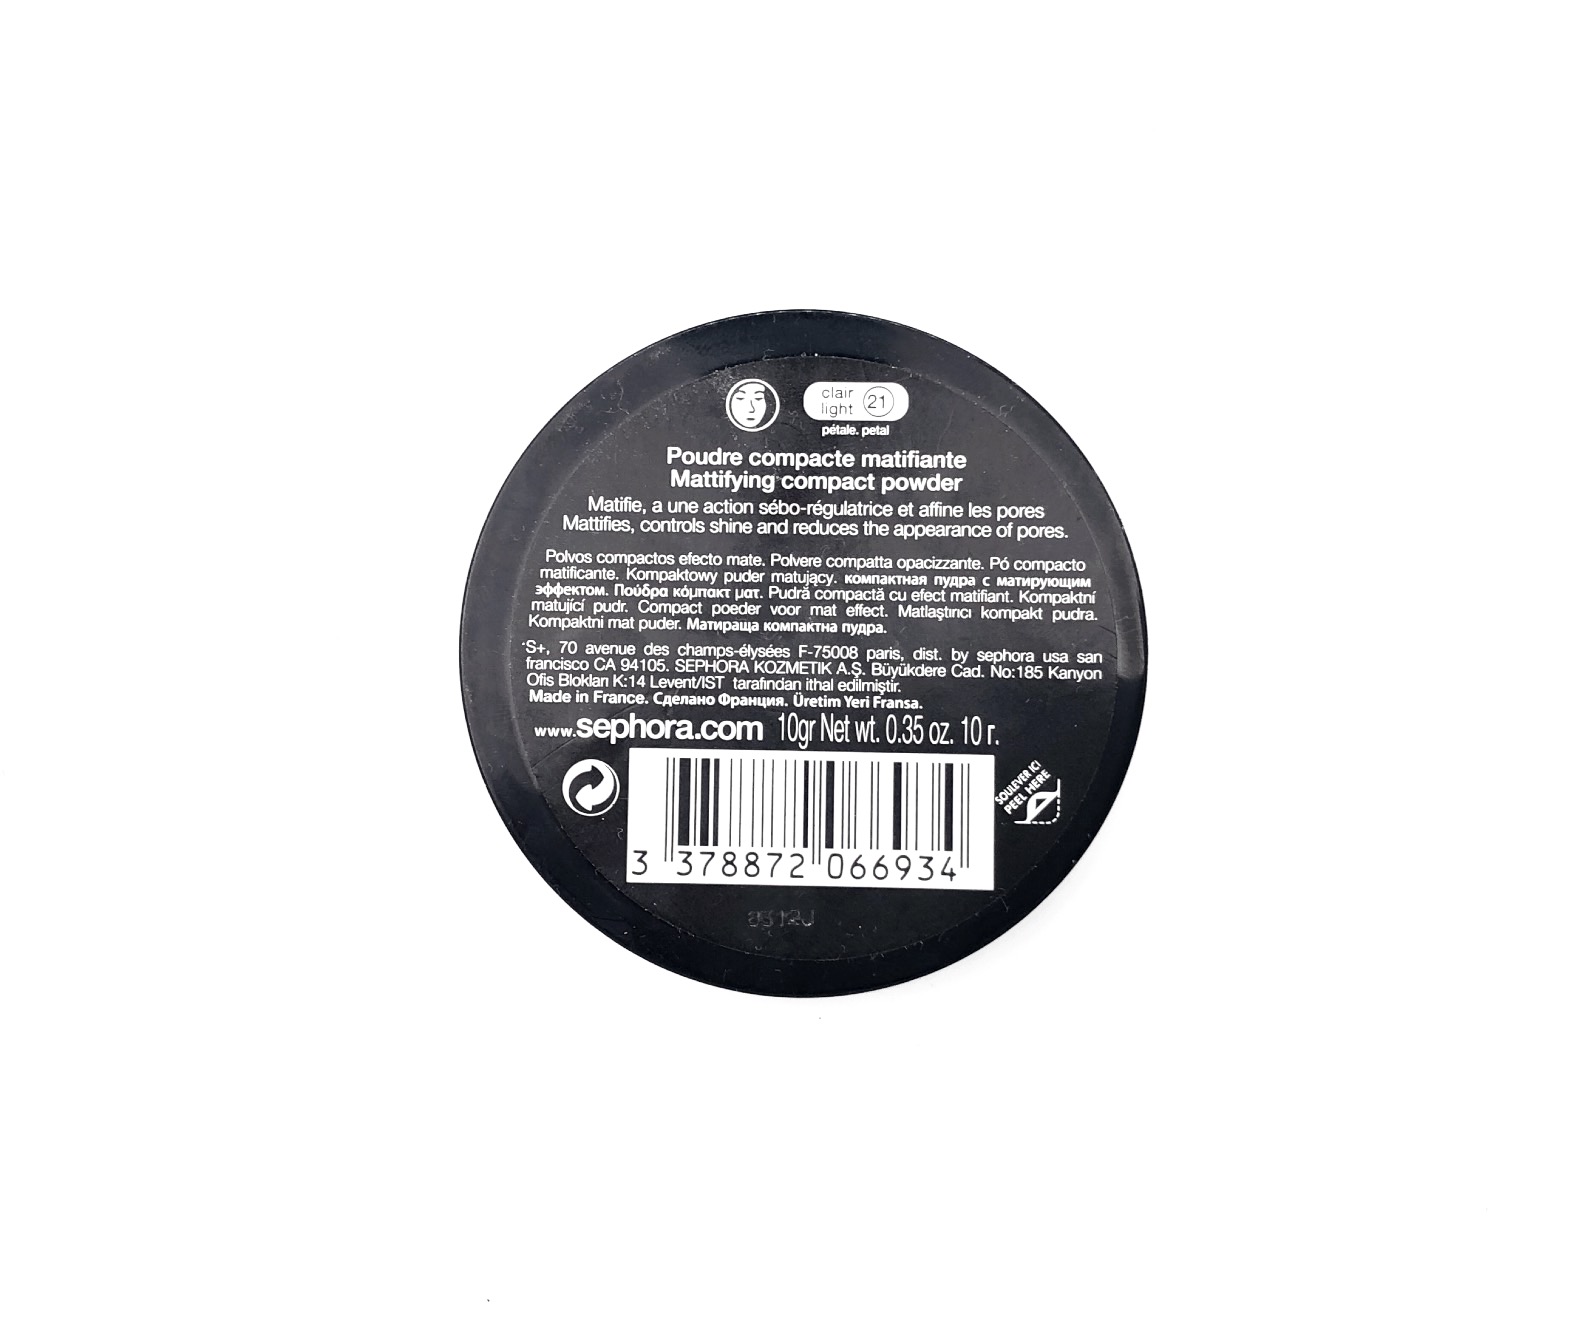 Italian packaging for Sephora 8HR Mattifying Pressed Powder